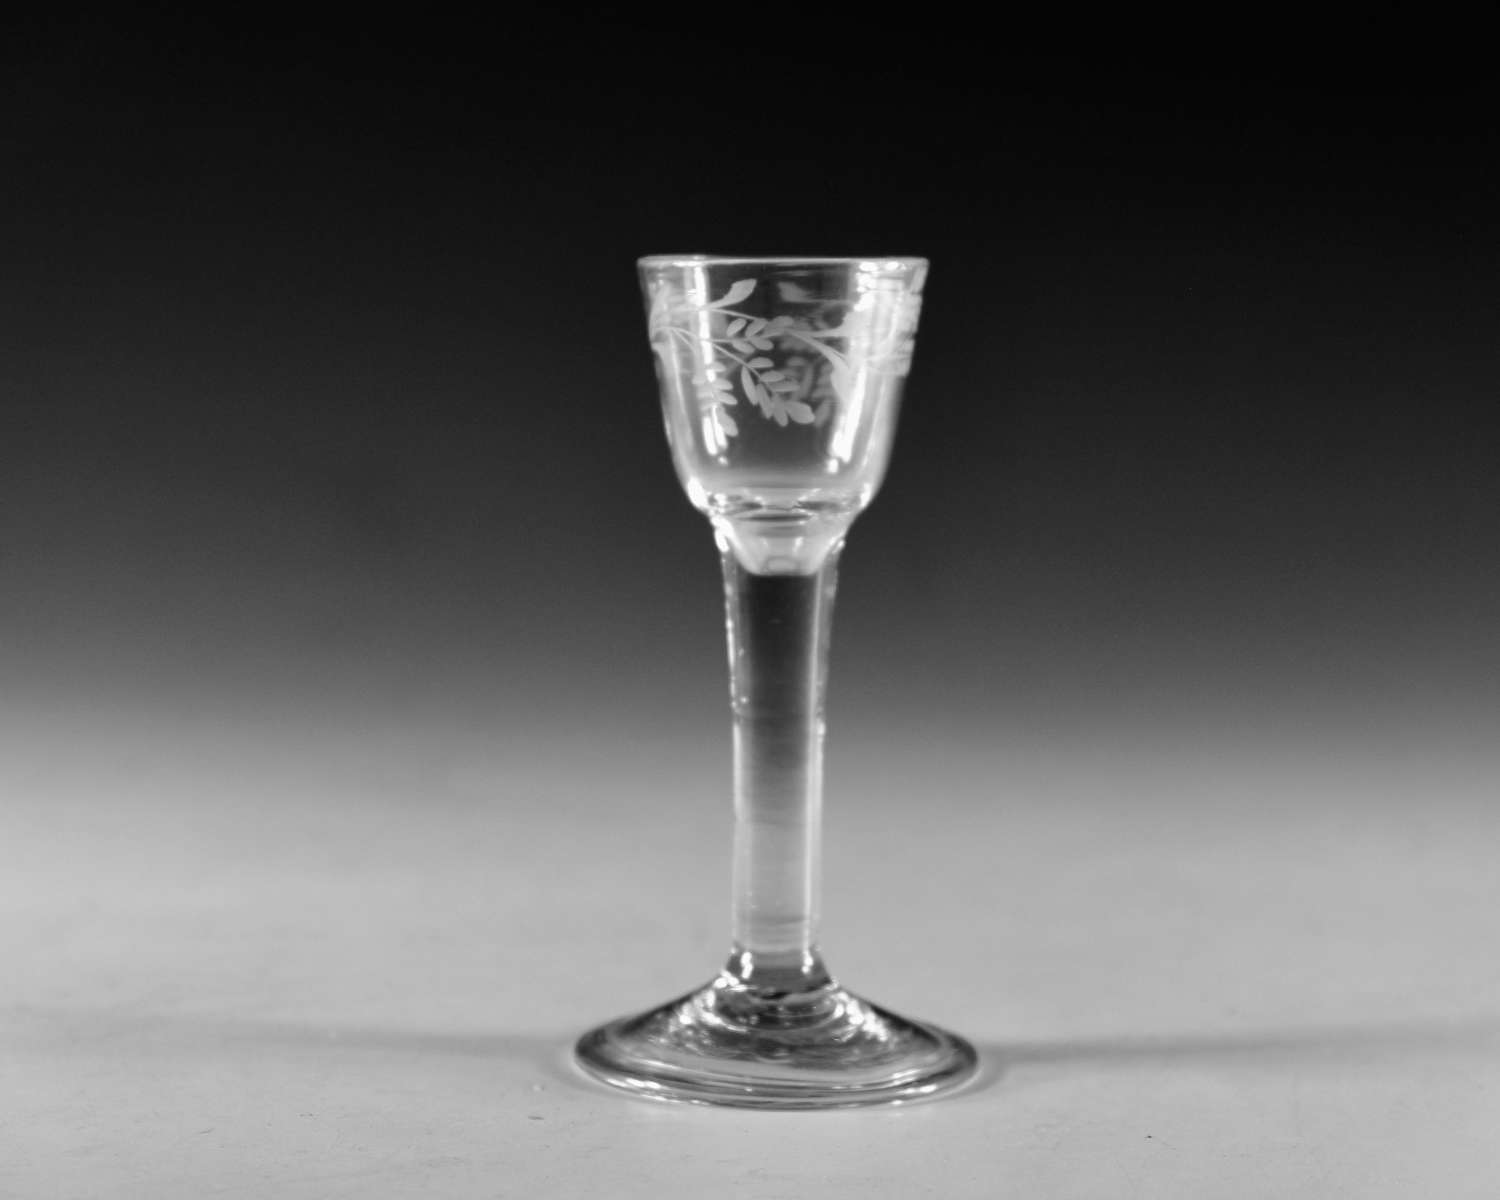 Antique glass - plain stem wine / cordial glass English c1760